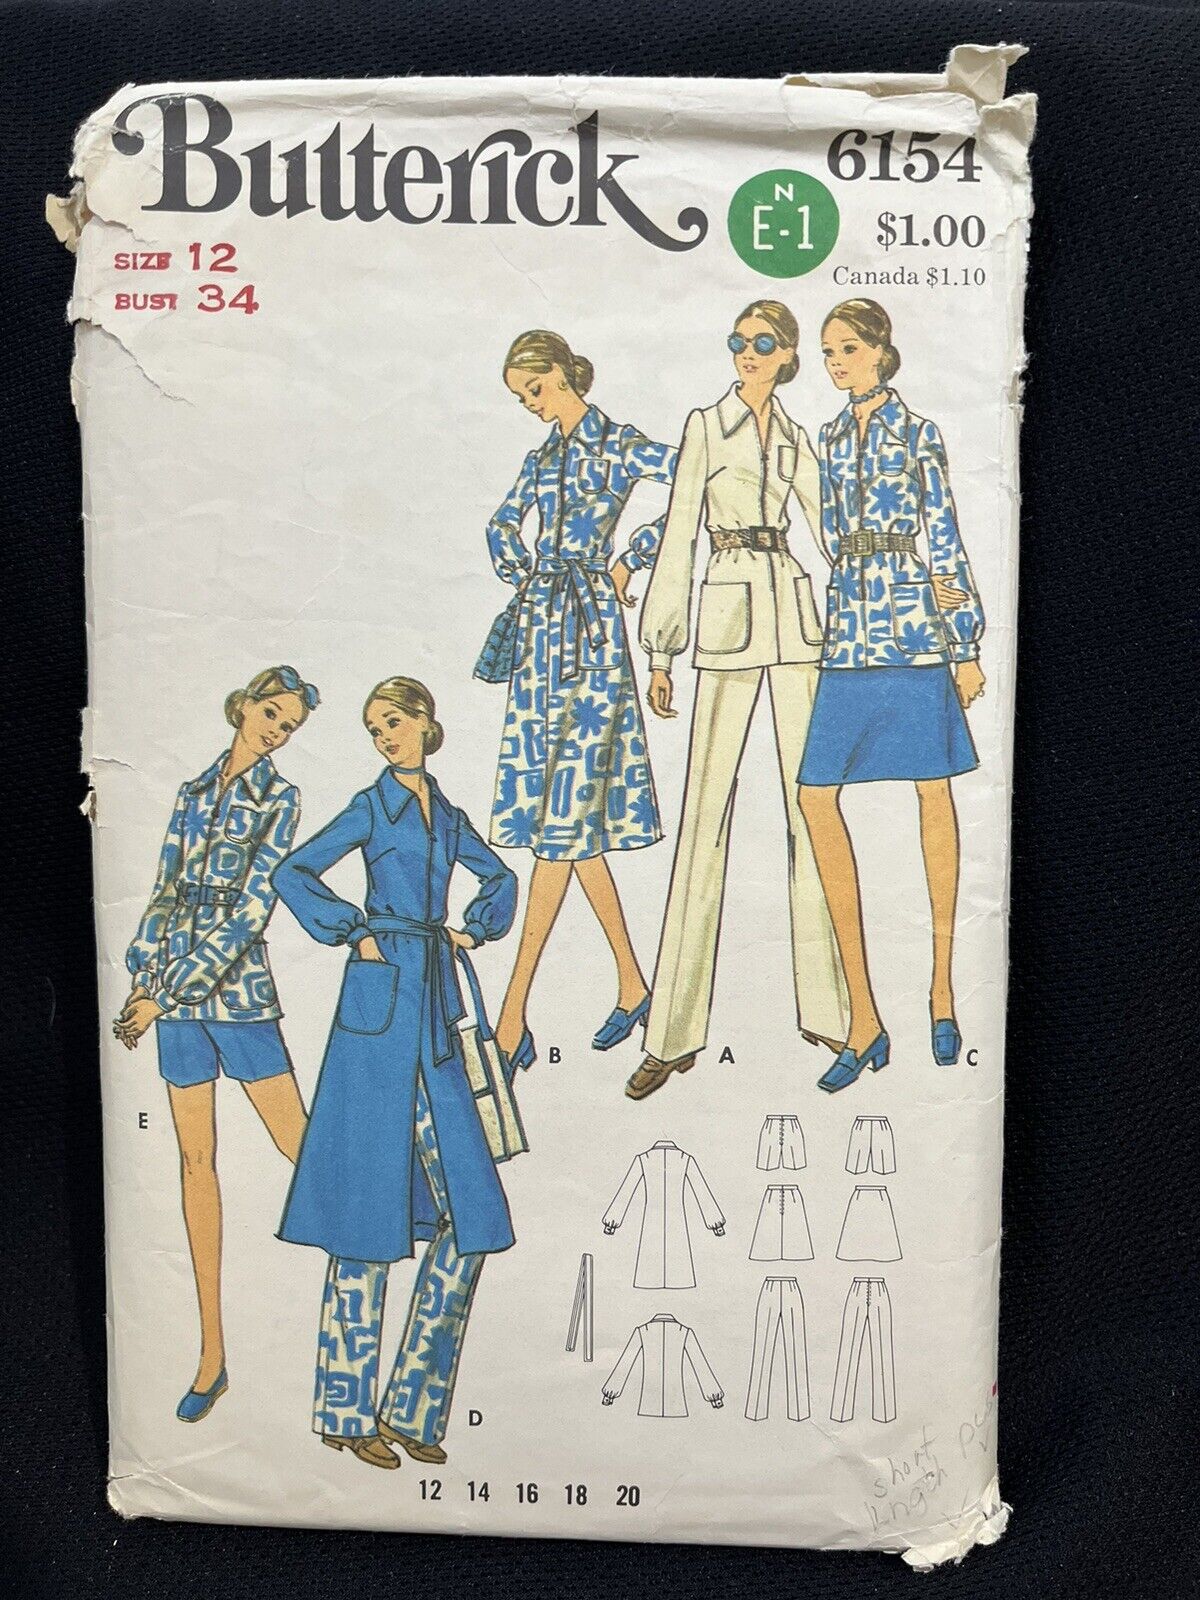 Vintage Butterick Pattern 6154 Dress Tunic Skirt Pants Shorts Cut Size 12 c1970s